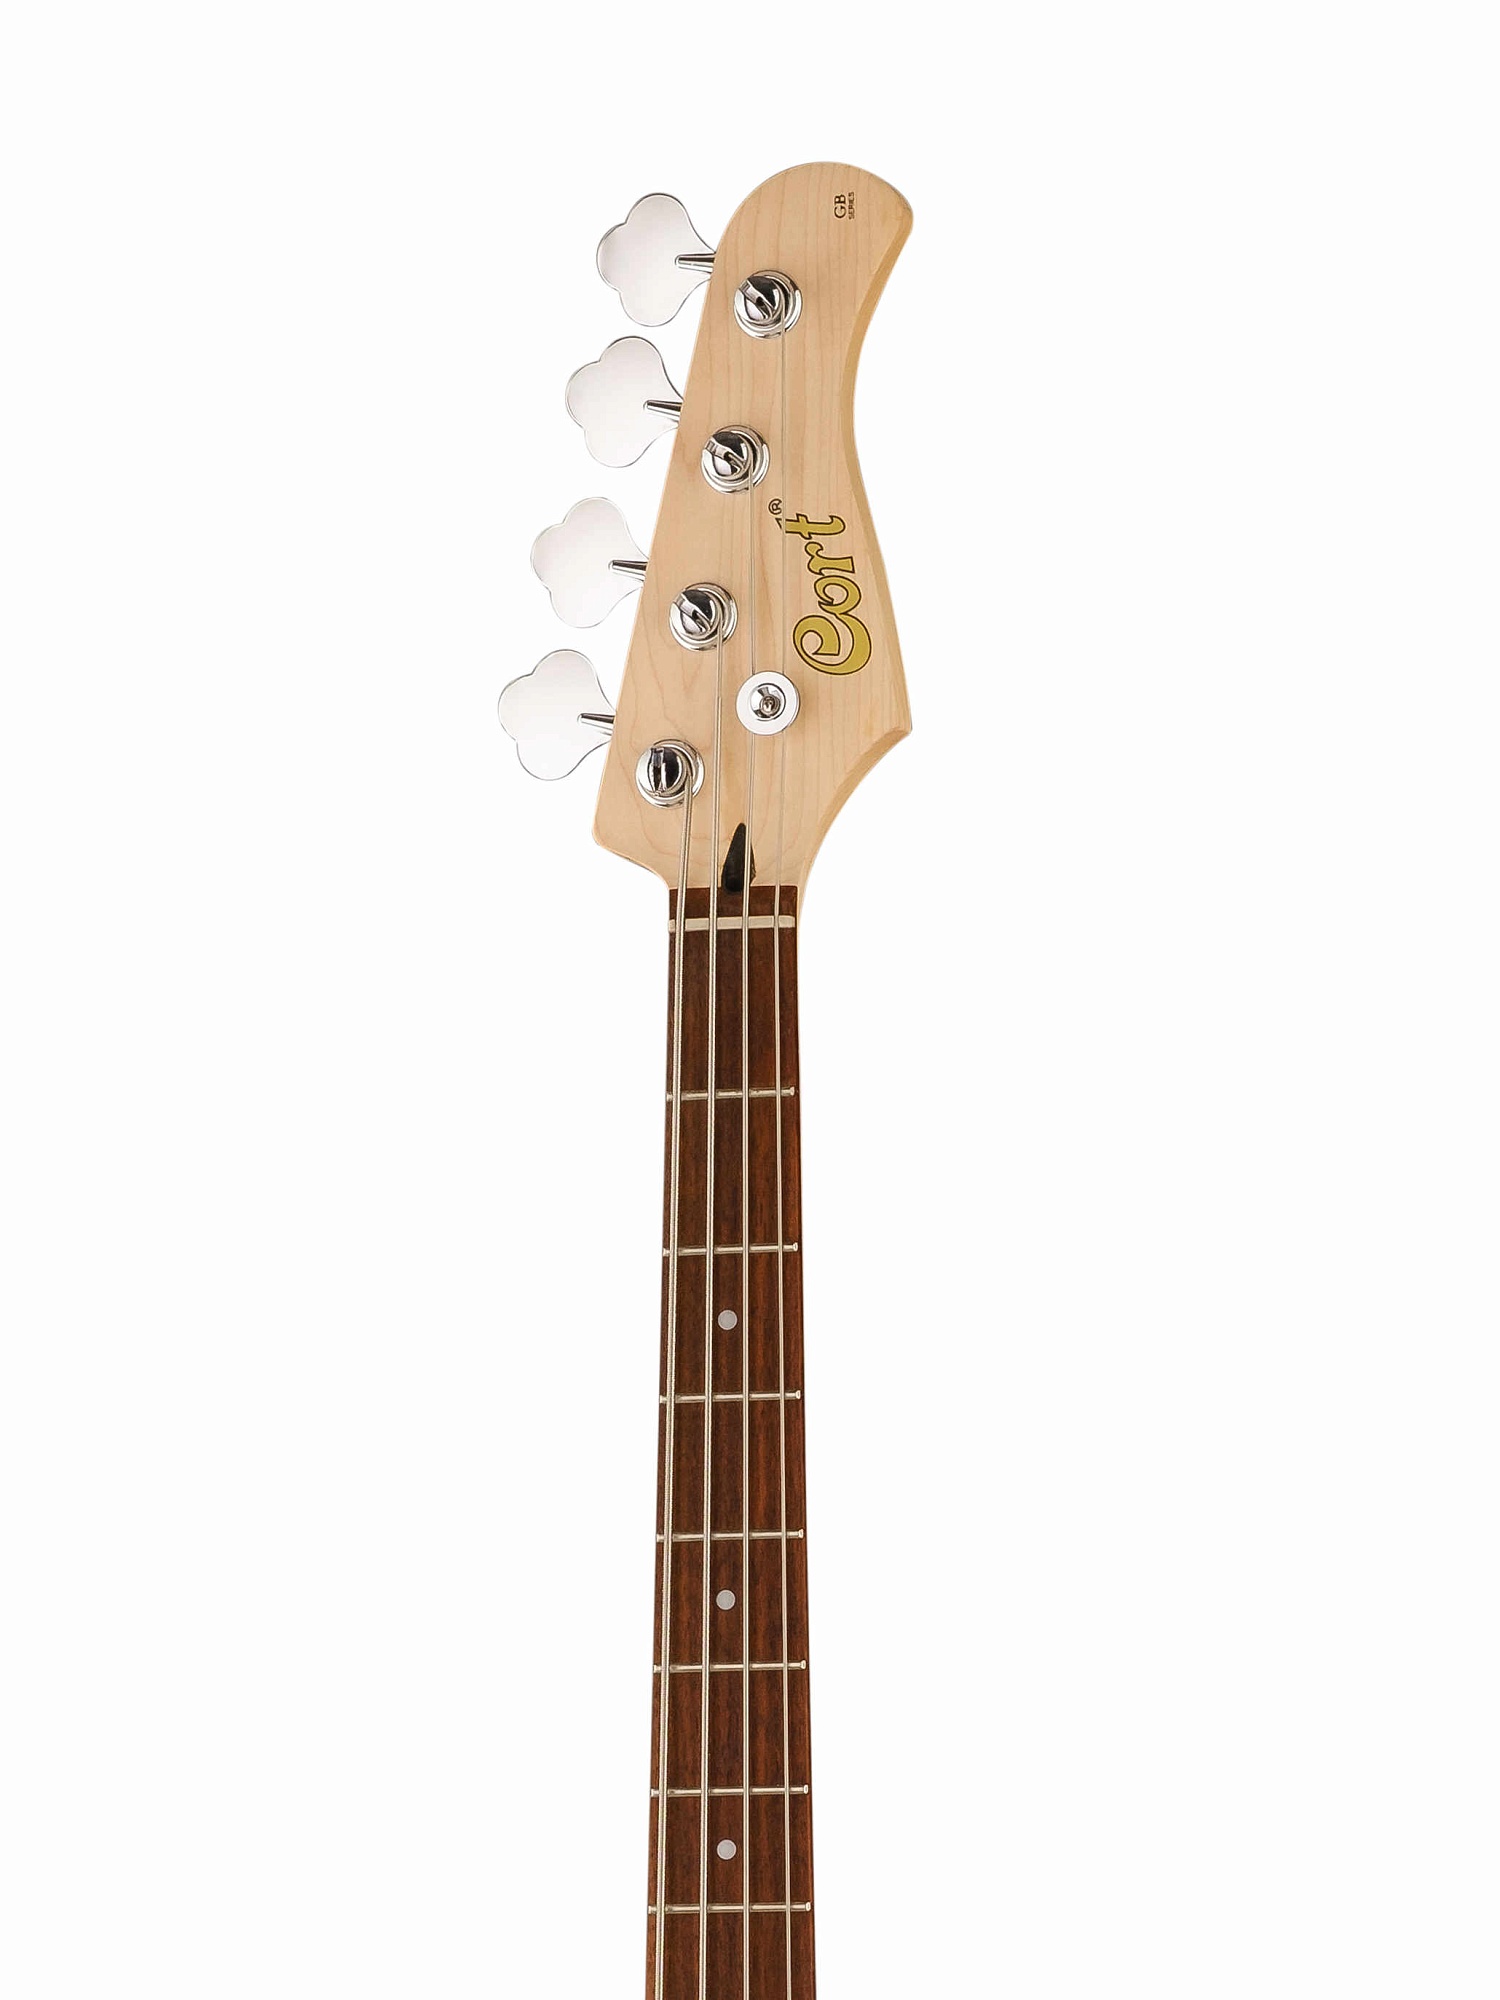 GB34JJ-WBAG-3TS GB Series Бас-гитара, санберст, с чехлом, Cort купить в prostore.me